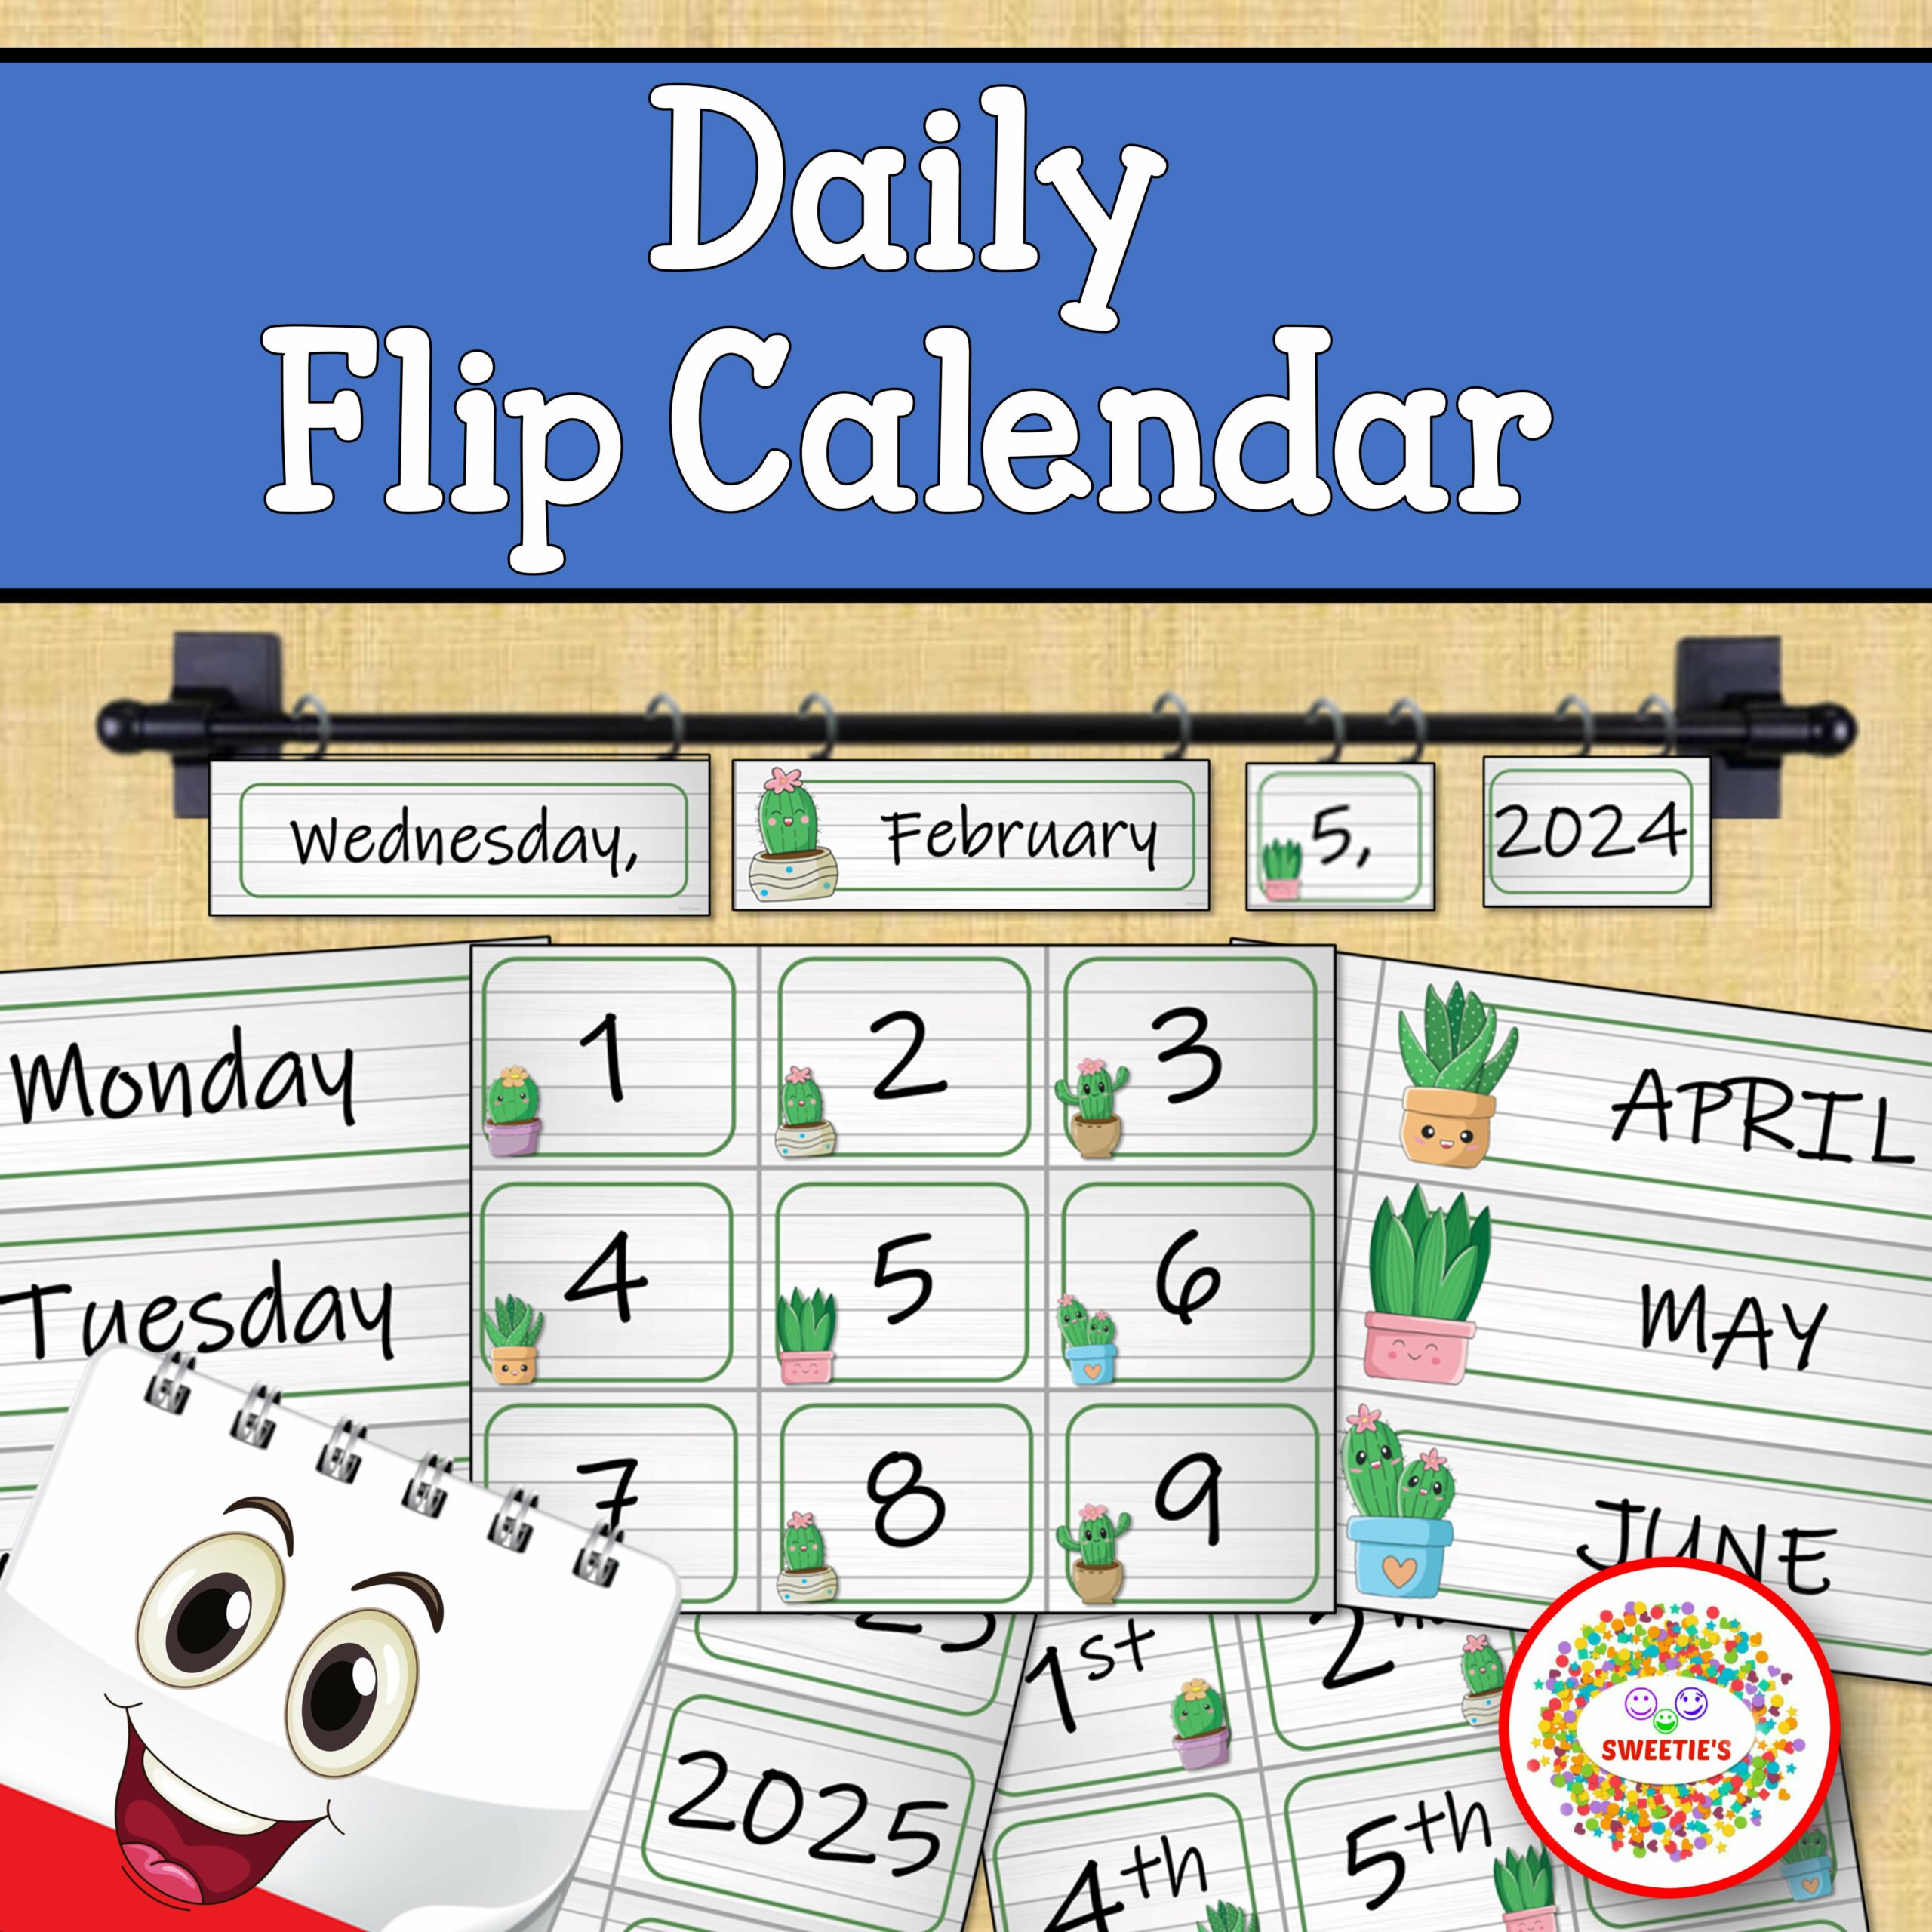 Daily Flip Calendar 2022 to 2051 Happy Succulent Theme